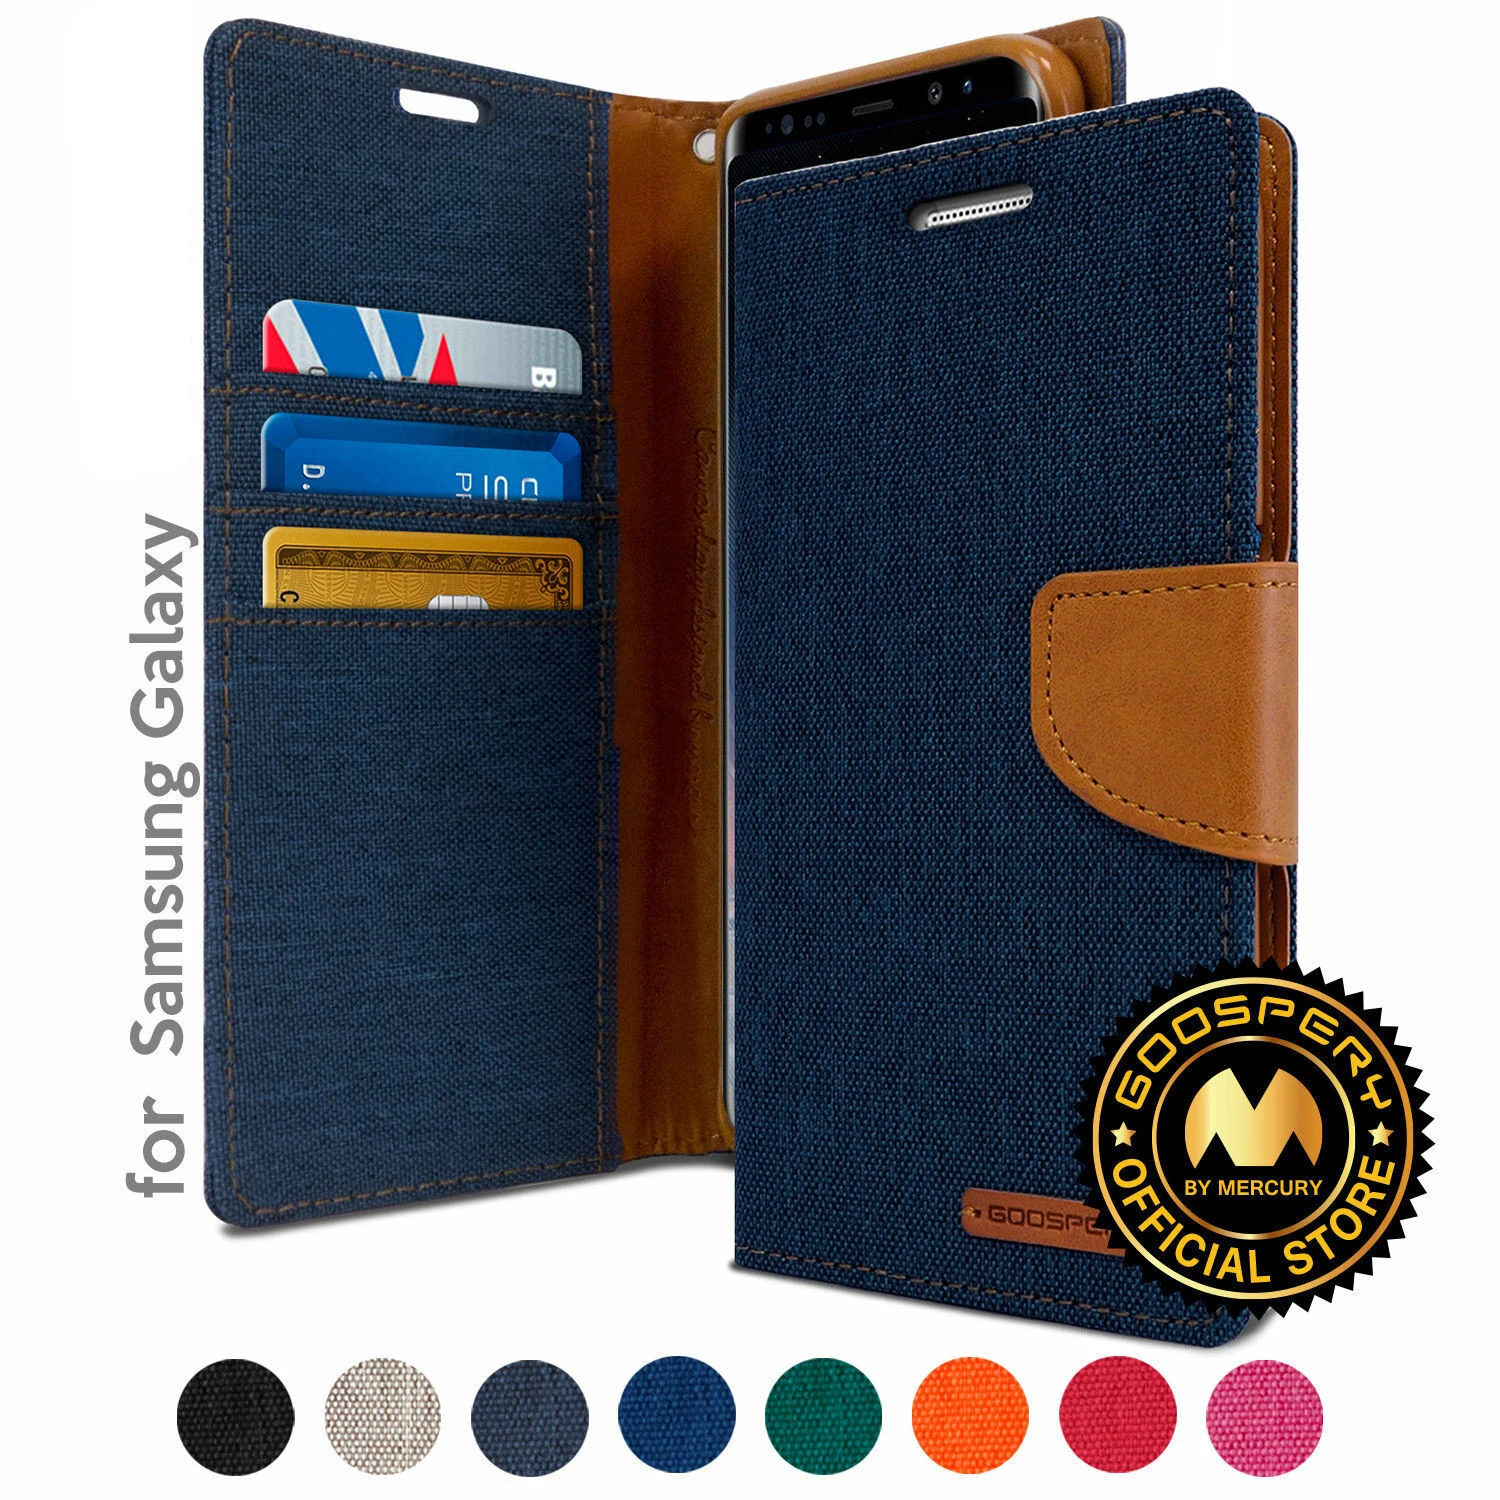 Меркурий Goospery холст Дневник Бумажник флип чехол для samsung Galaxy Note 9 10 note 10 plus